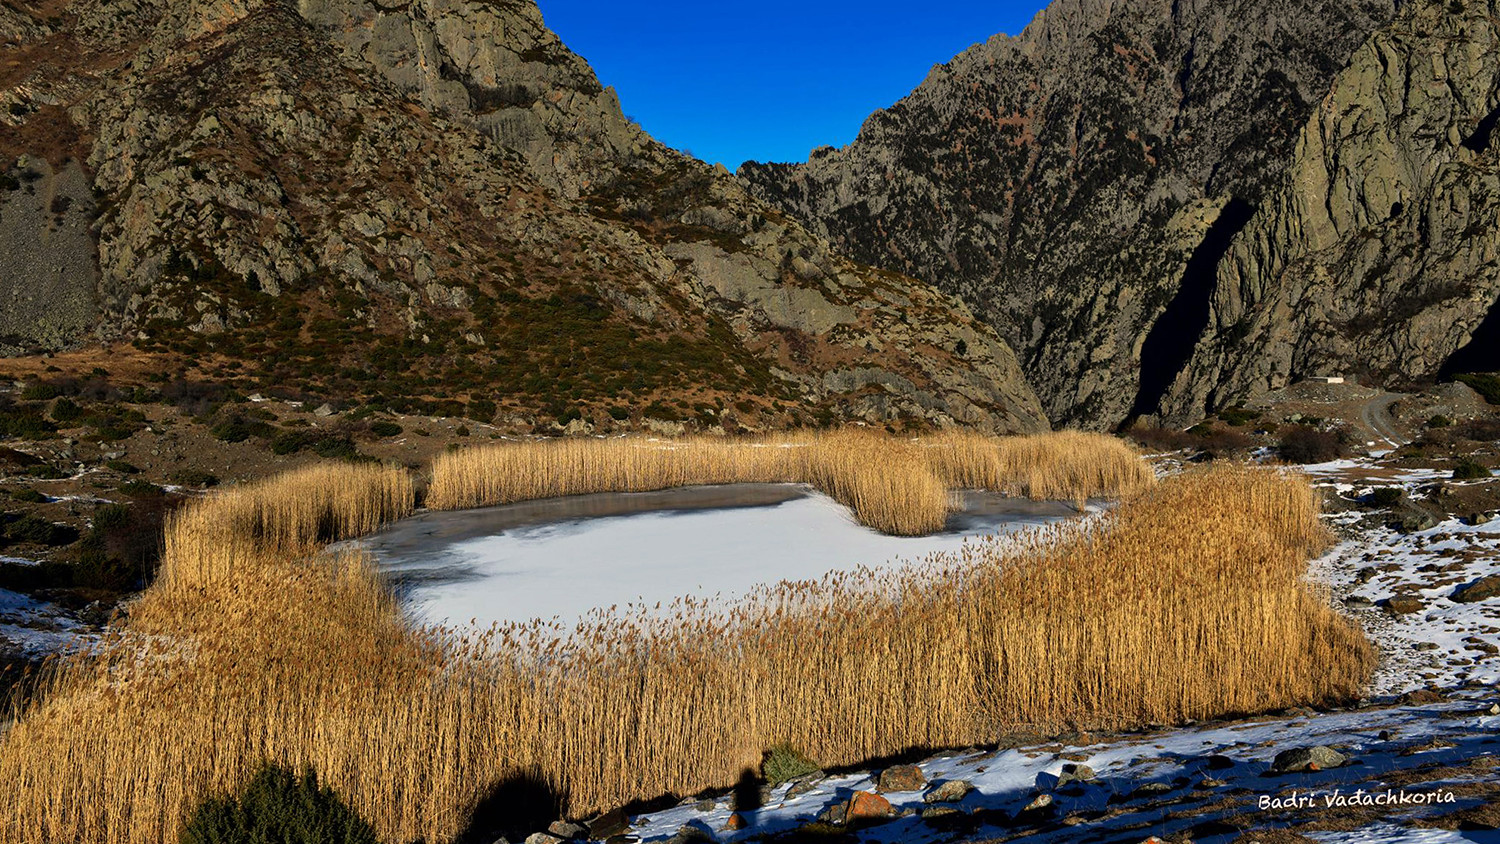 Lake in Great Caucasus Mountains